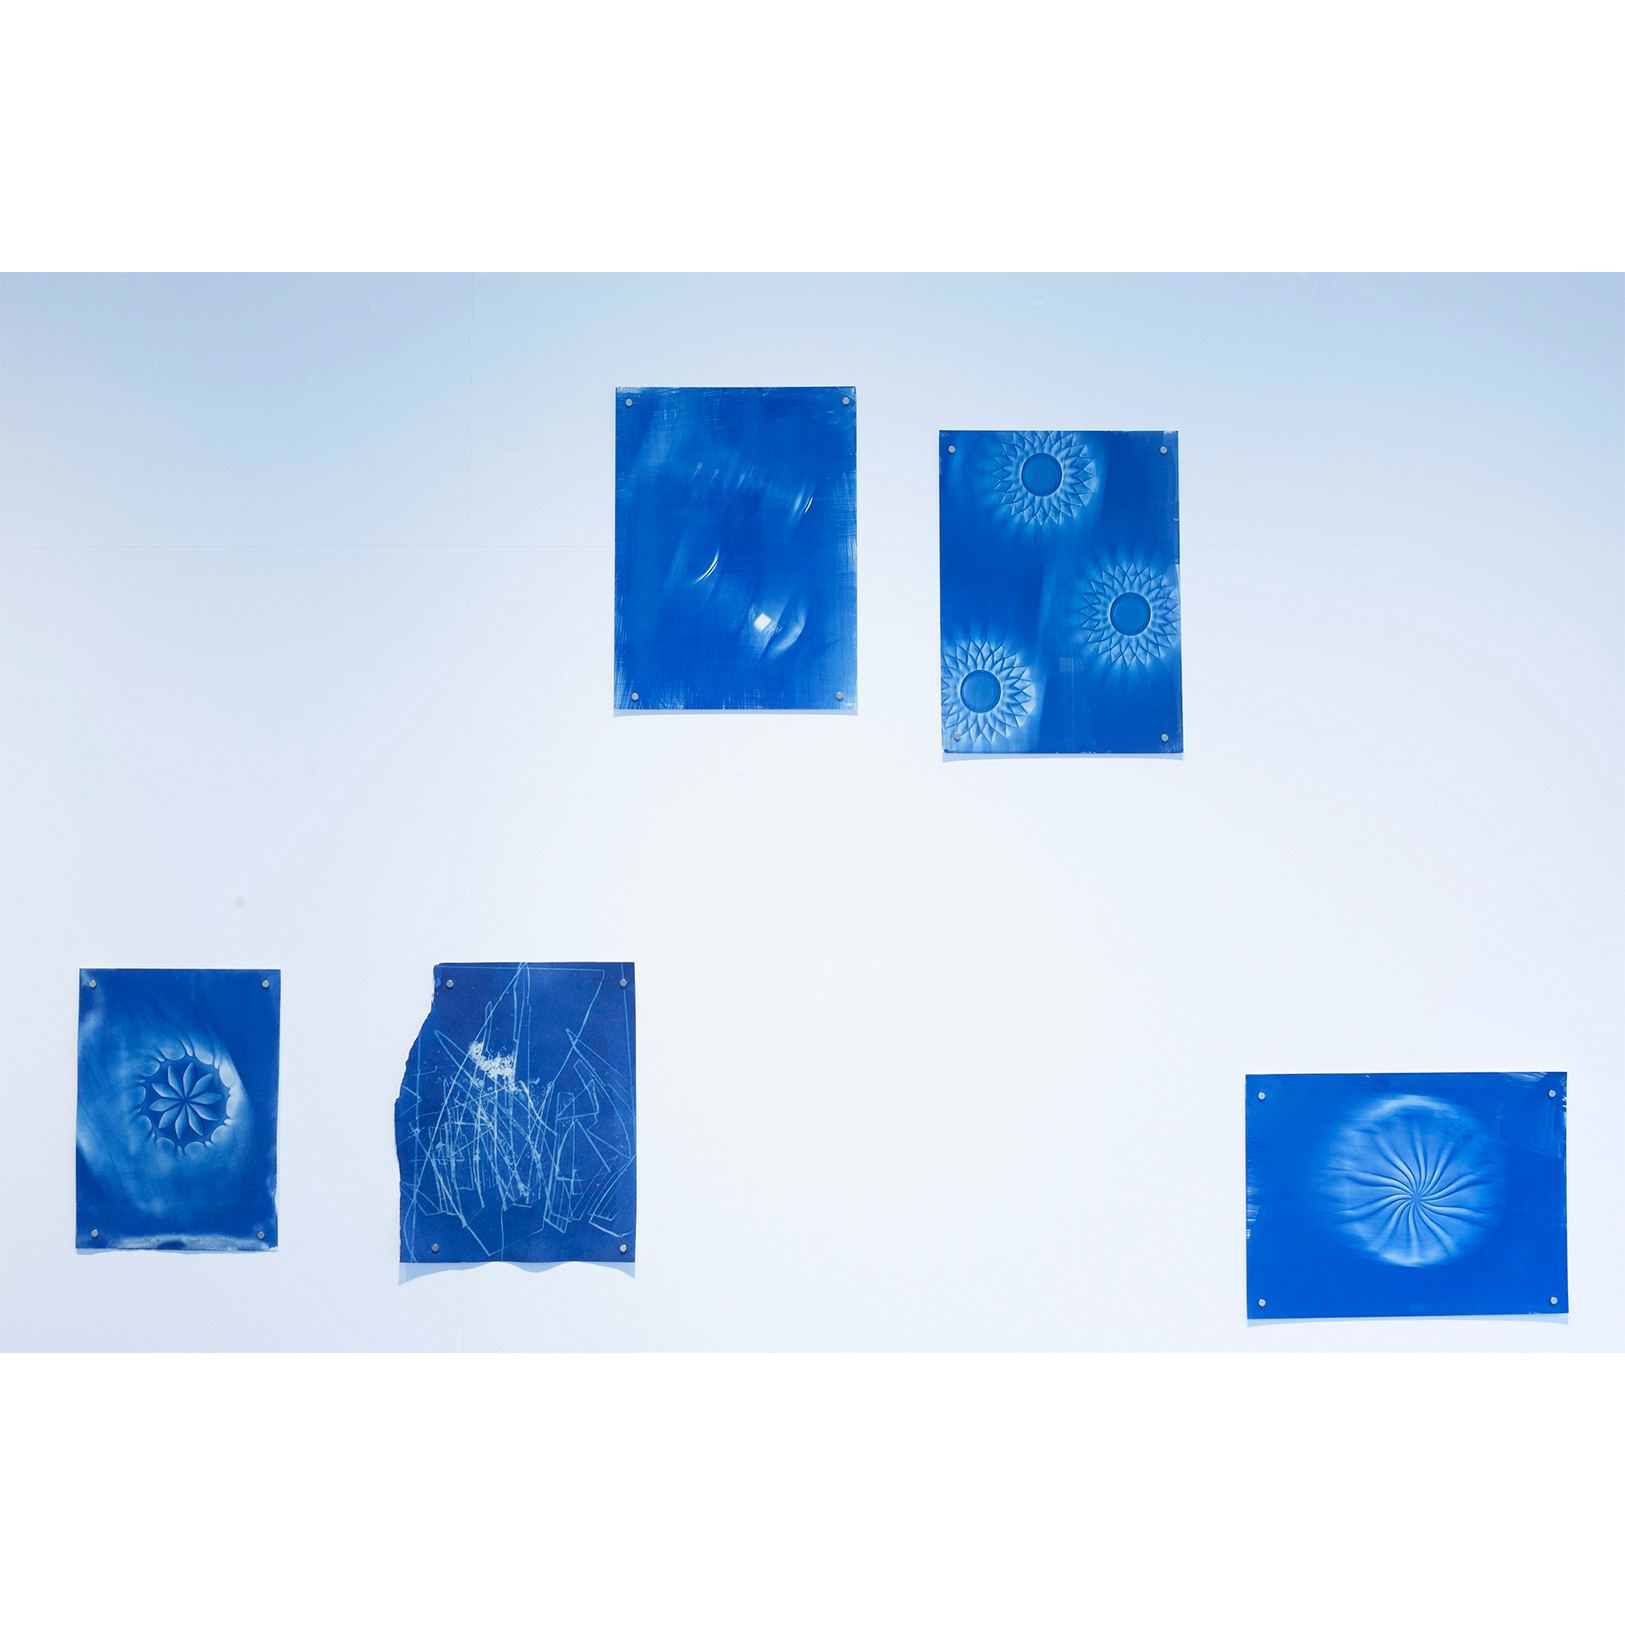 Jens Sundheim<br>《 unique cyano type prints 》001